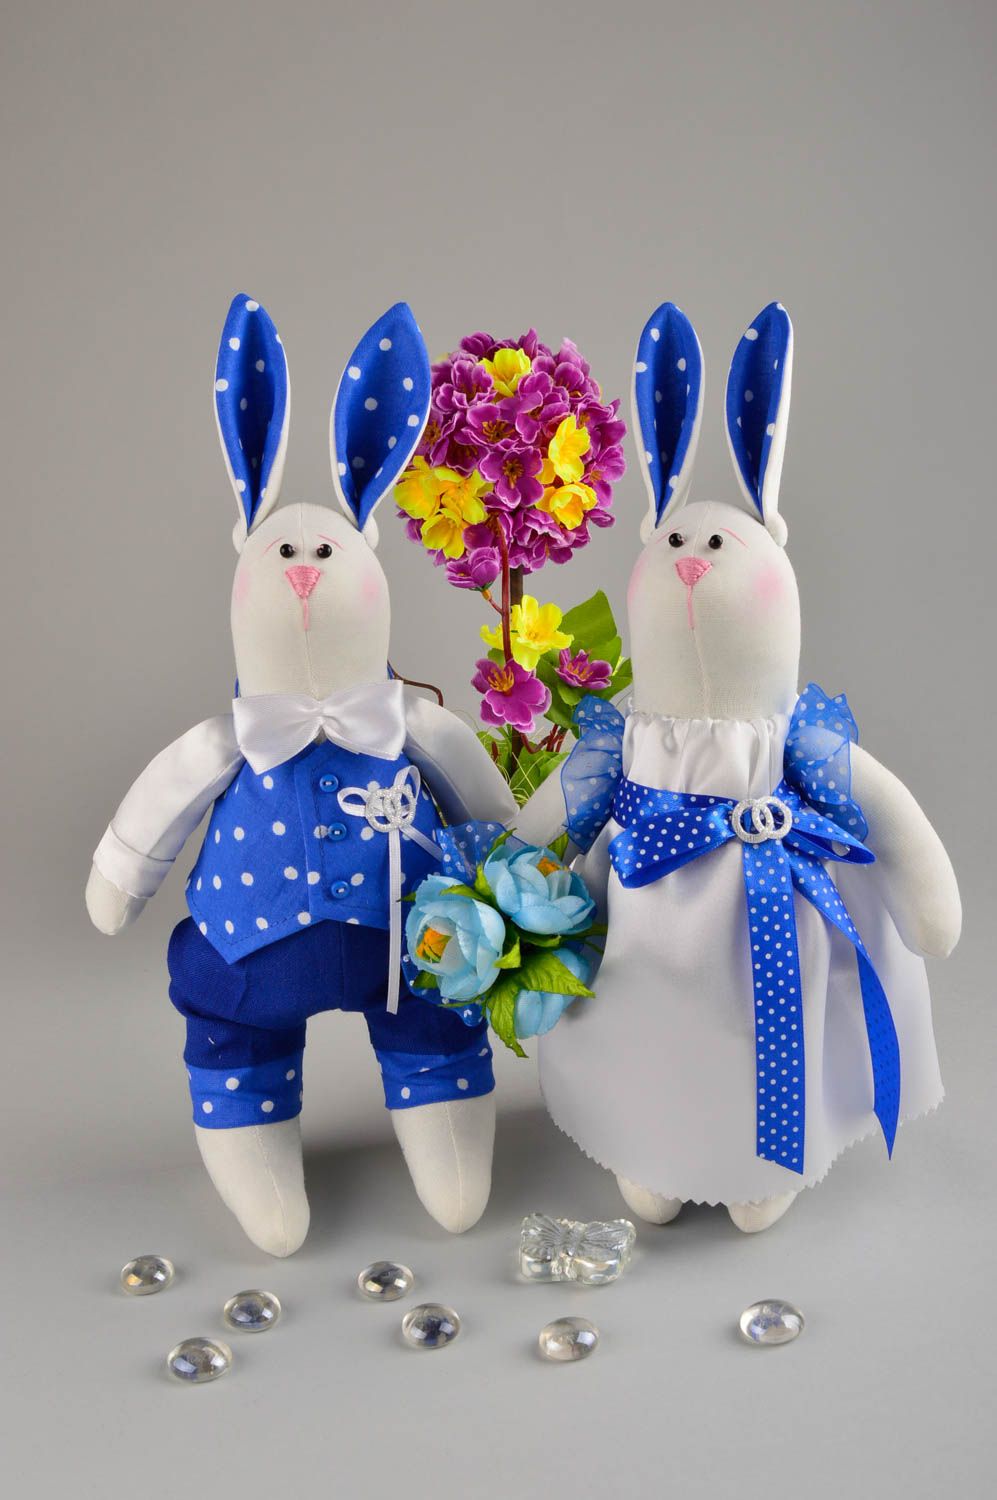 Handmade toys 2 unusual rabbits homemade toys in blue costumes wedding decor photo 1